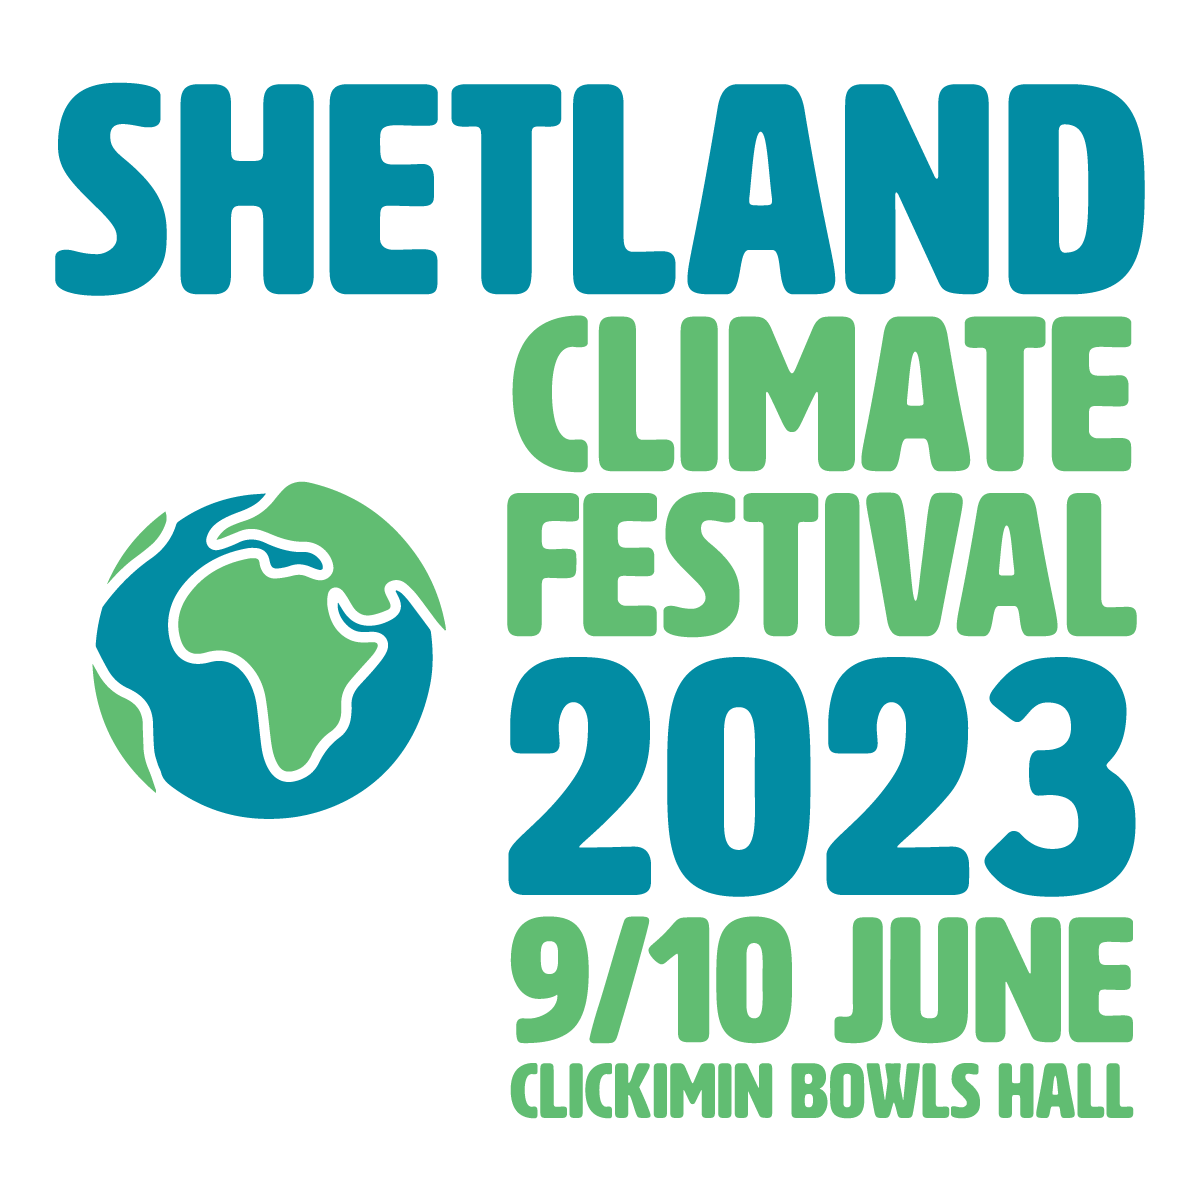 Shetland Climate Festival 2023. 9/10 June, Clickimin Bowls Hall